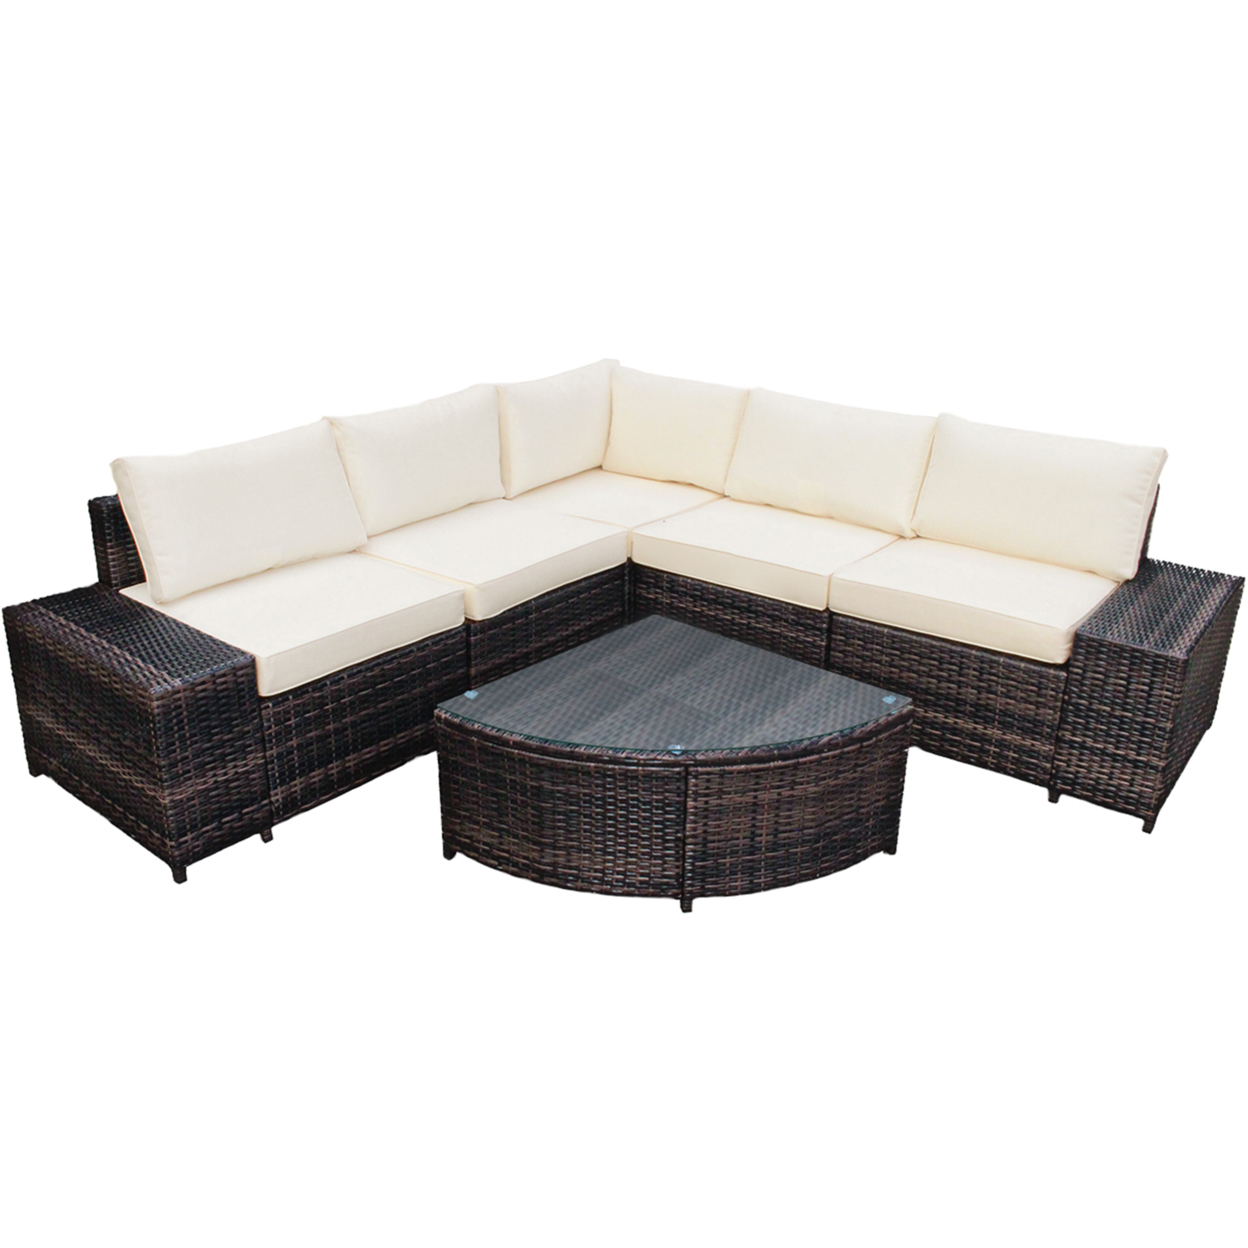 6PCS Wicker Furniture Sectional Sofa Set W/ Cushions Off White